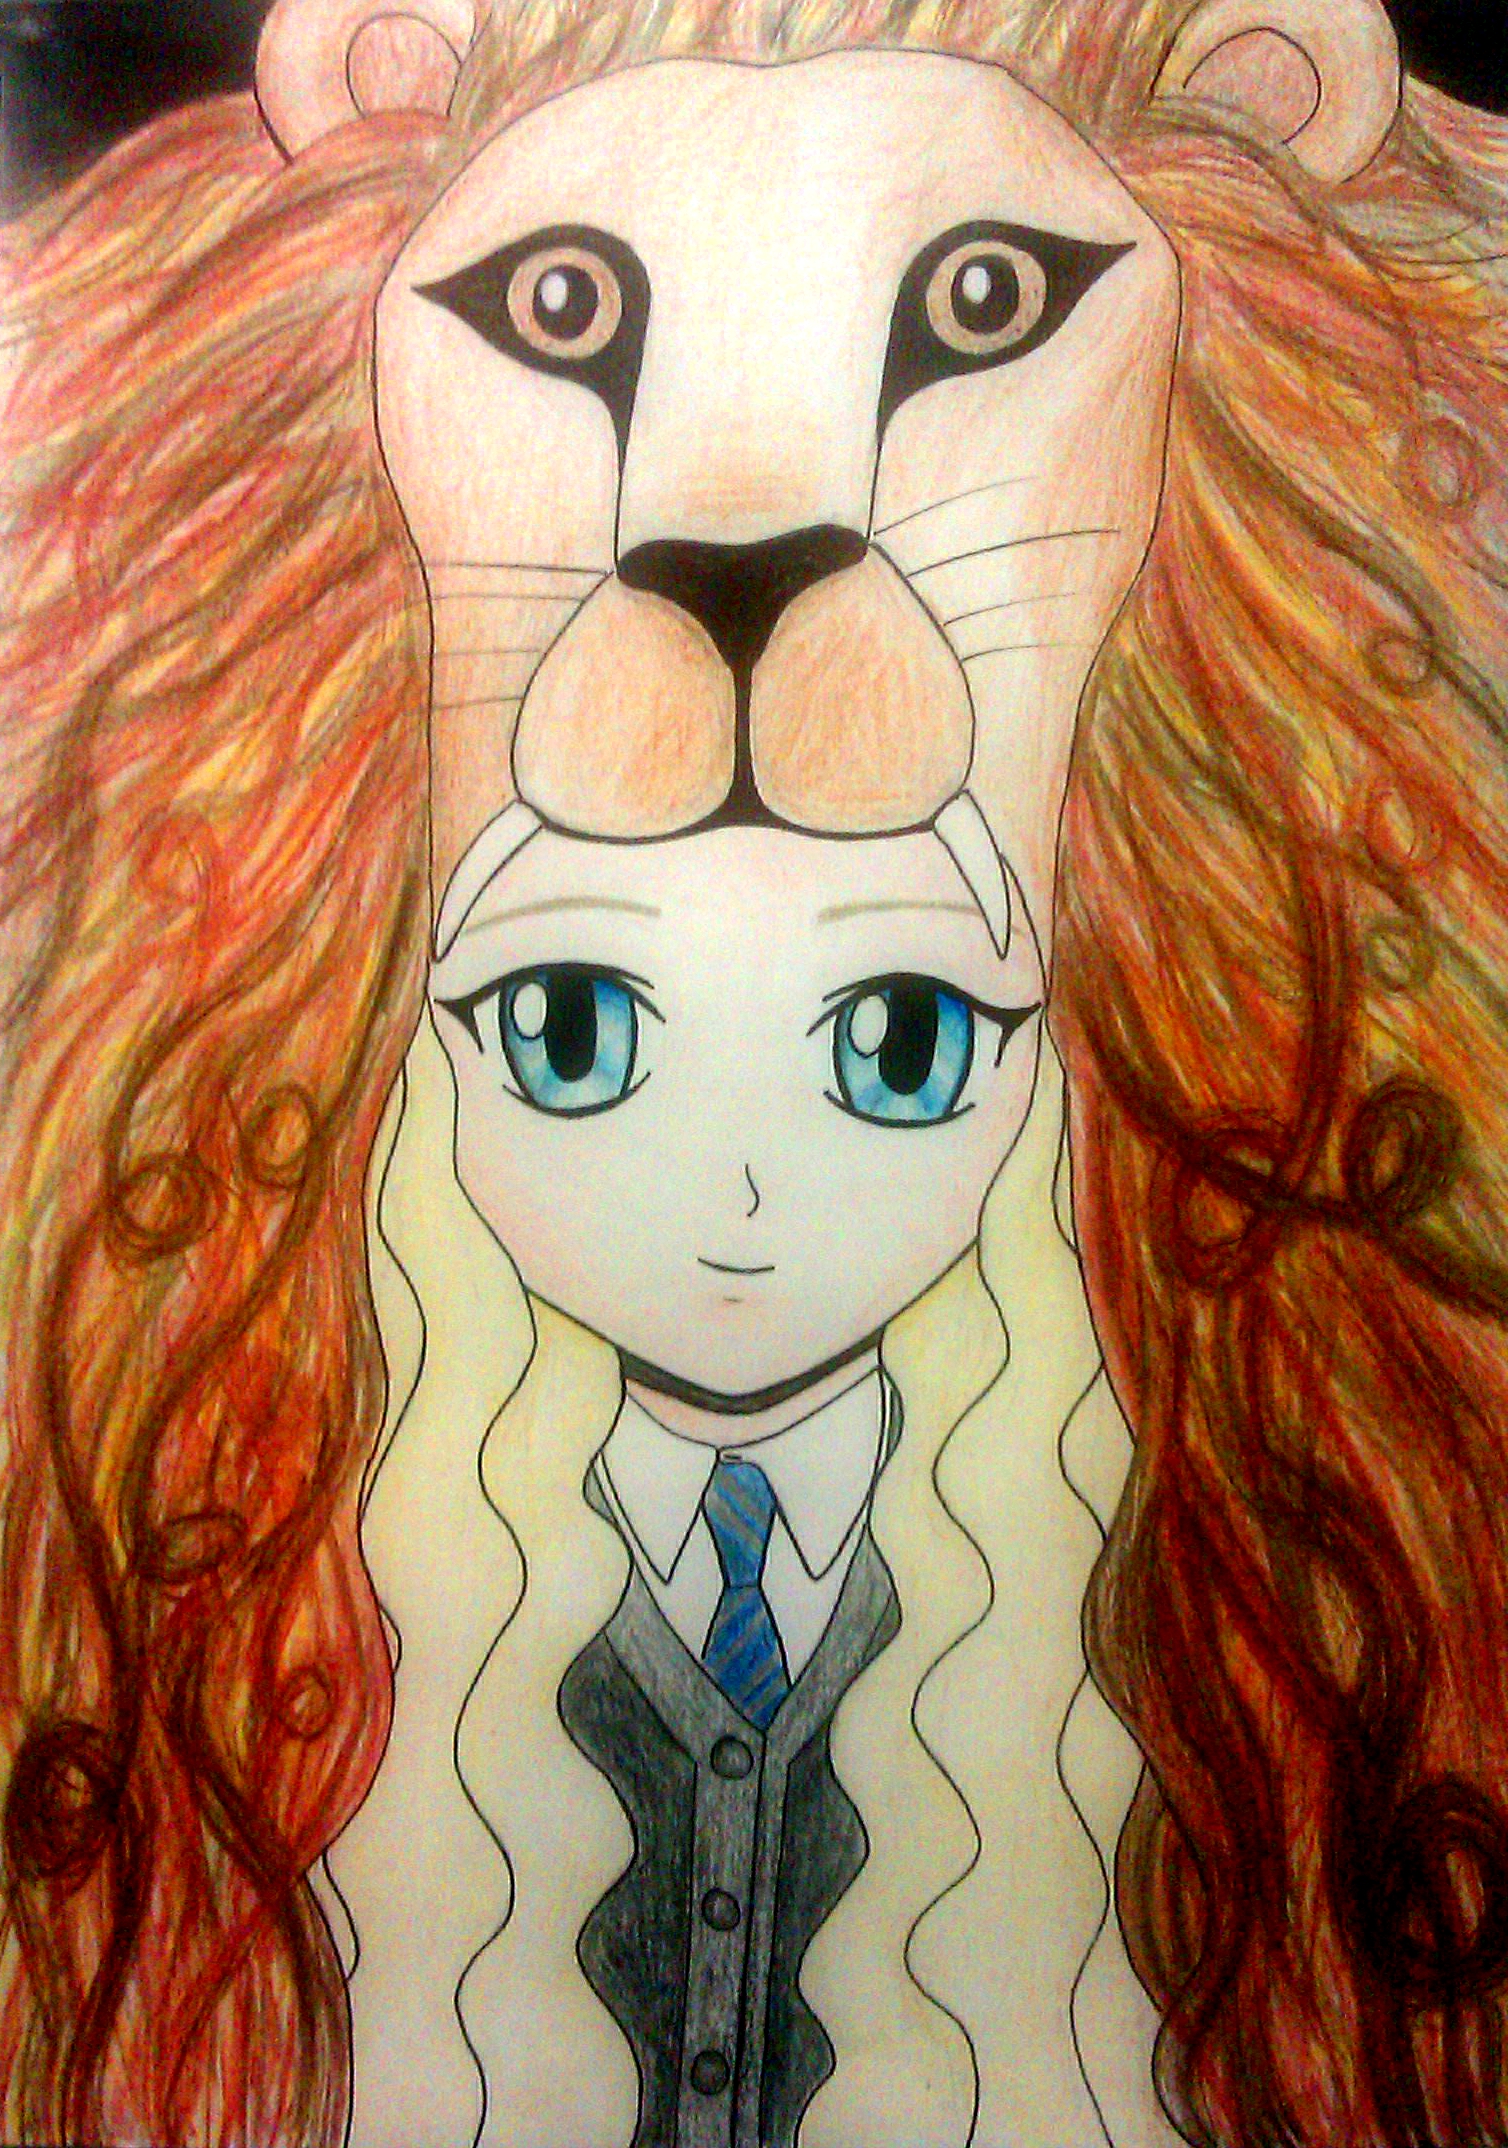 Artisitic impression of Luna Lovegood in her lion dress